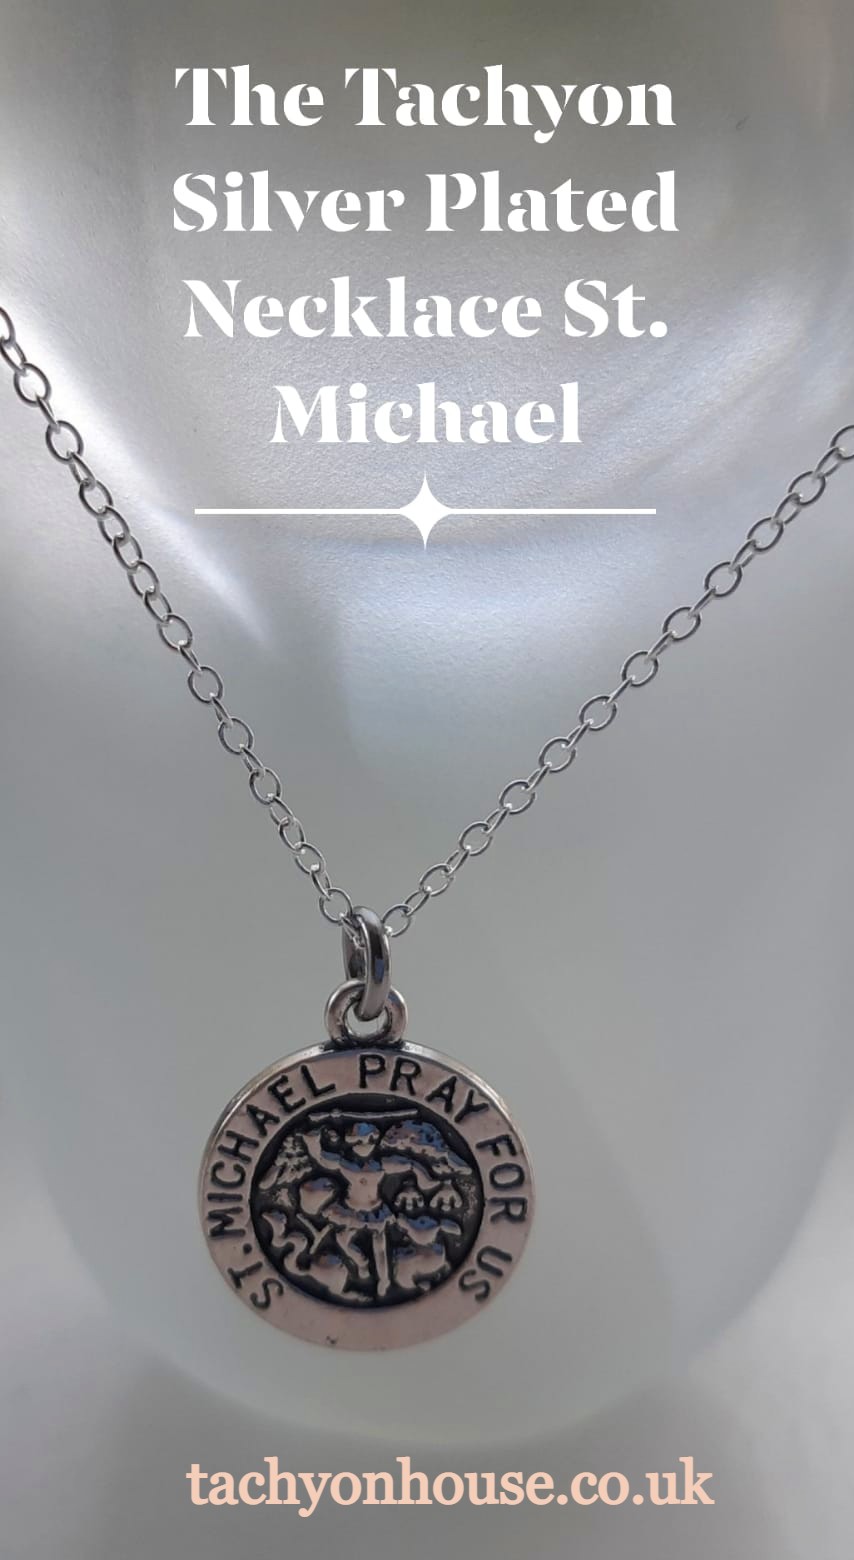 Tachyon Silver Plated Necklace St. Michael